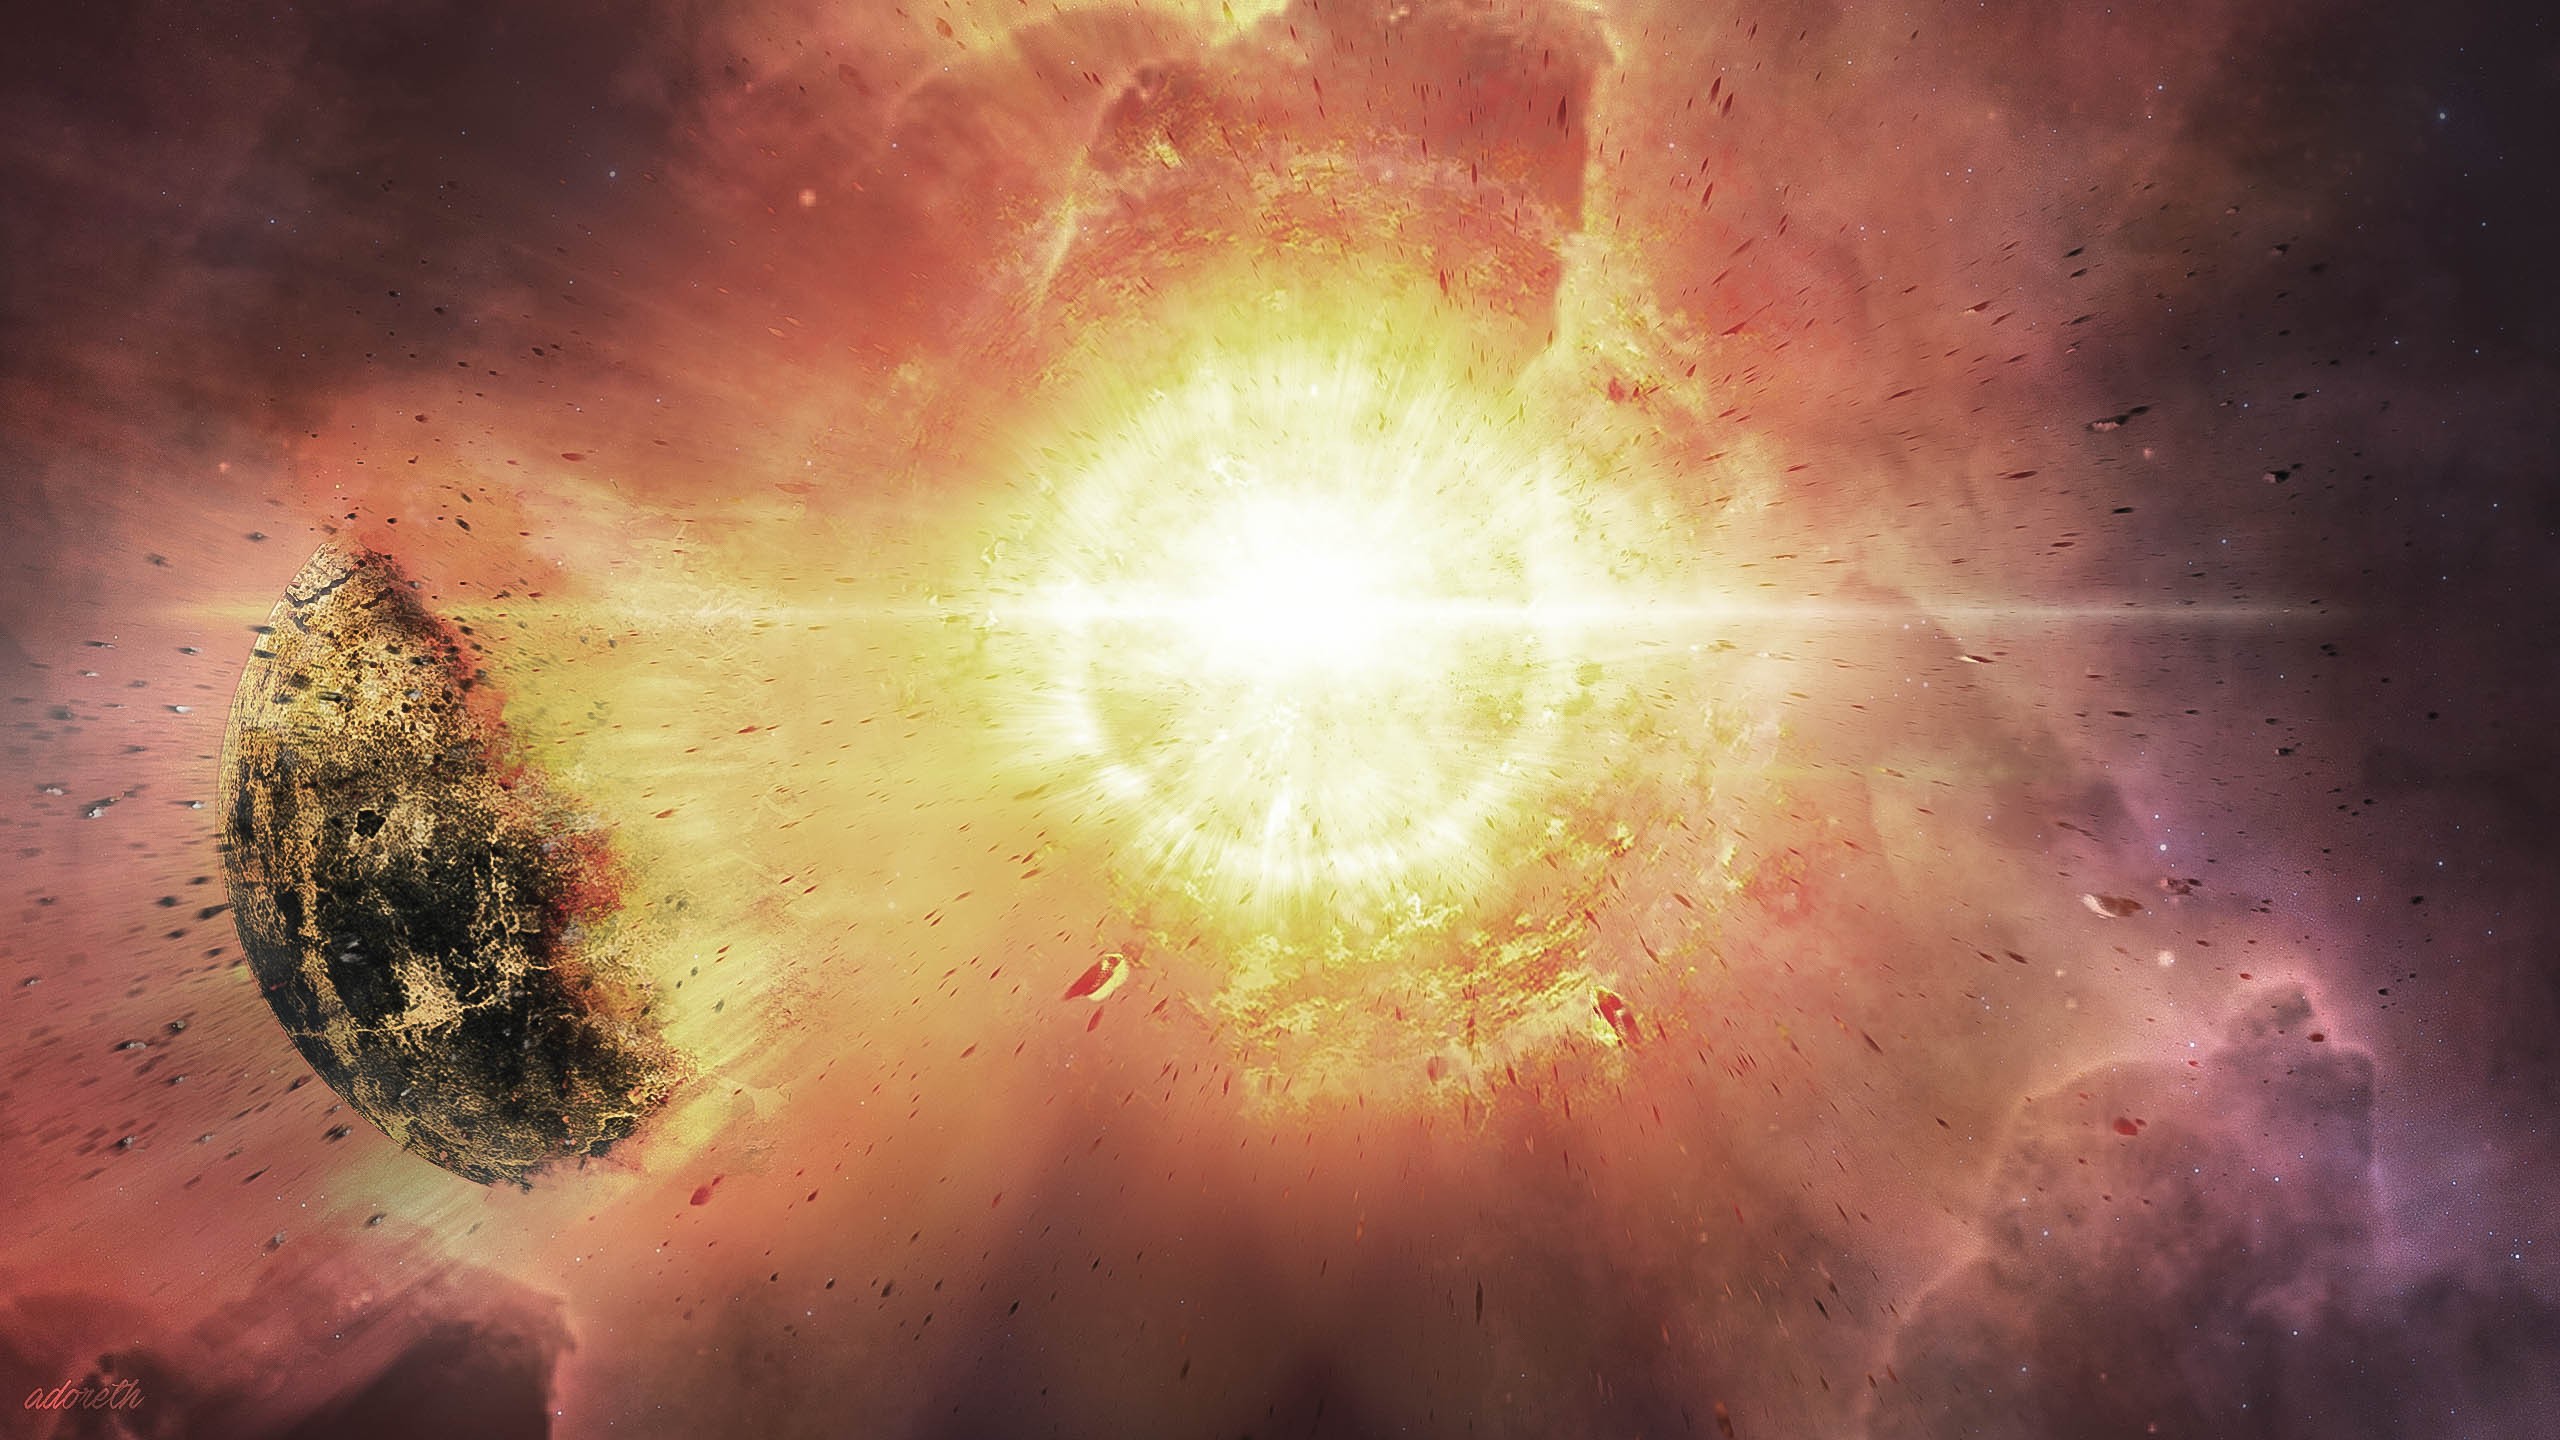 General 2560x1440 space Sun stars nebula planet explosion space art apocalyptic digital art